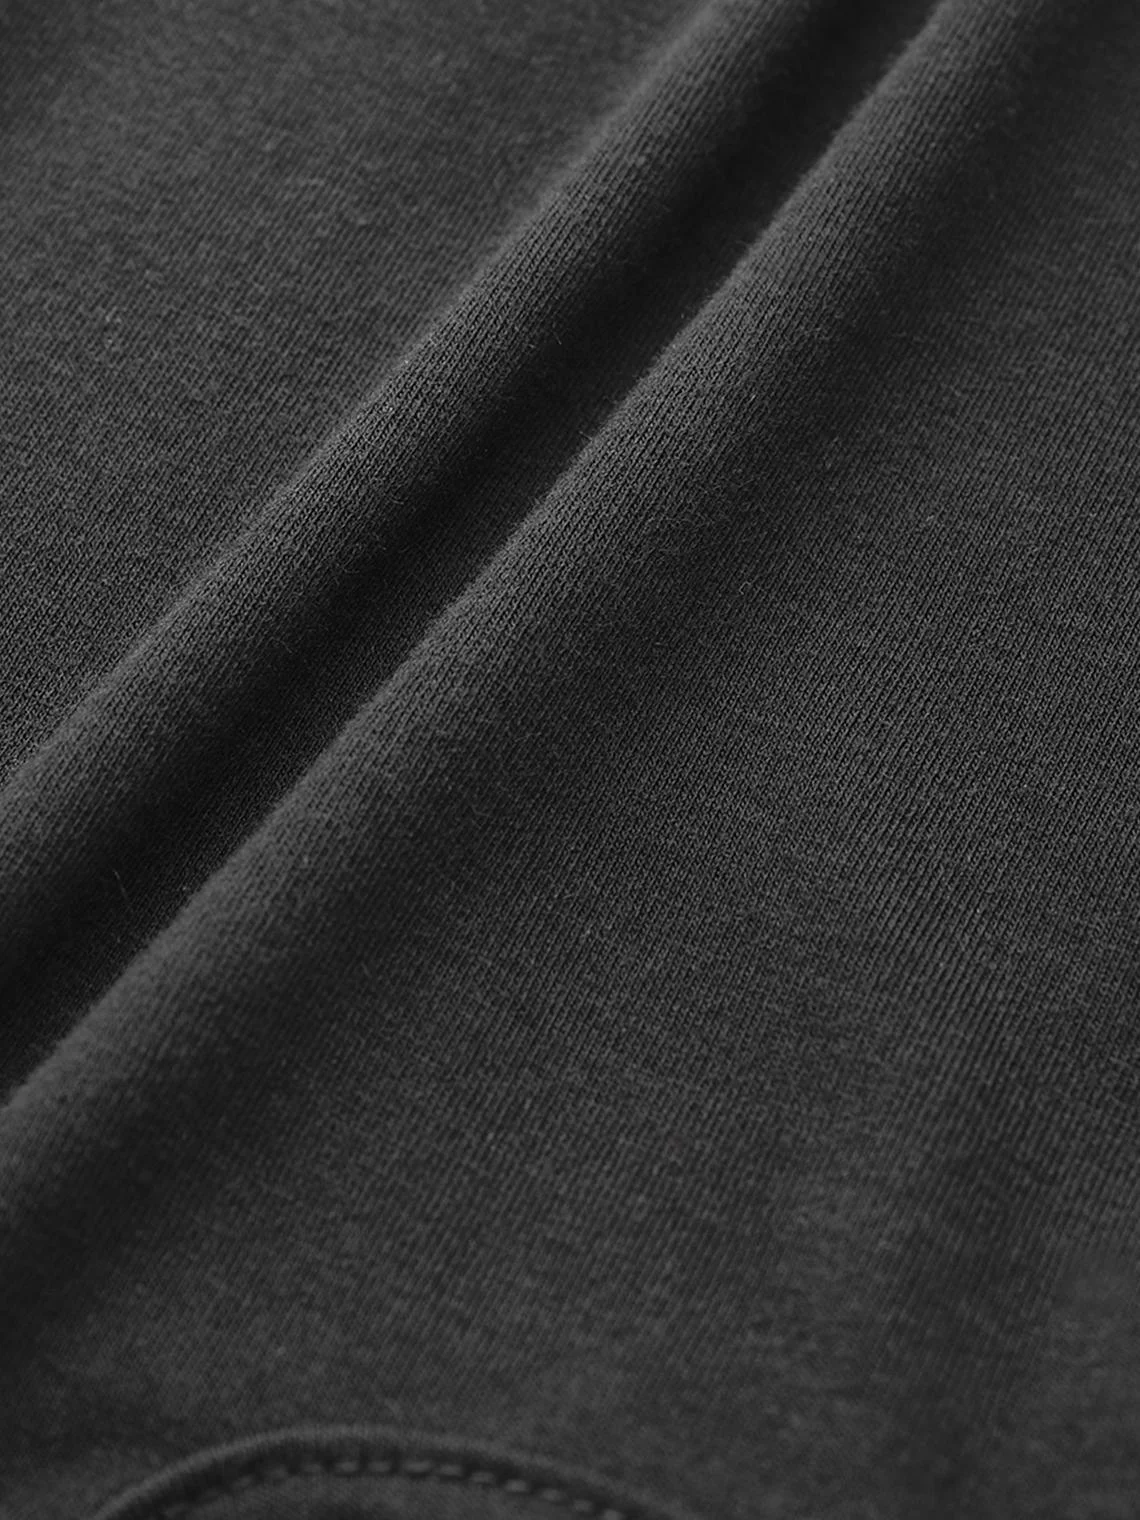 【Final Sale】Edgy Black Cut Out Asymmetrical Design Slim Top T-Shirt